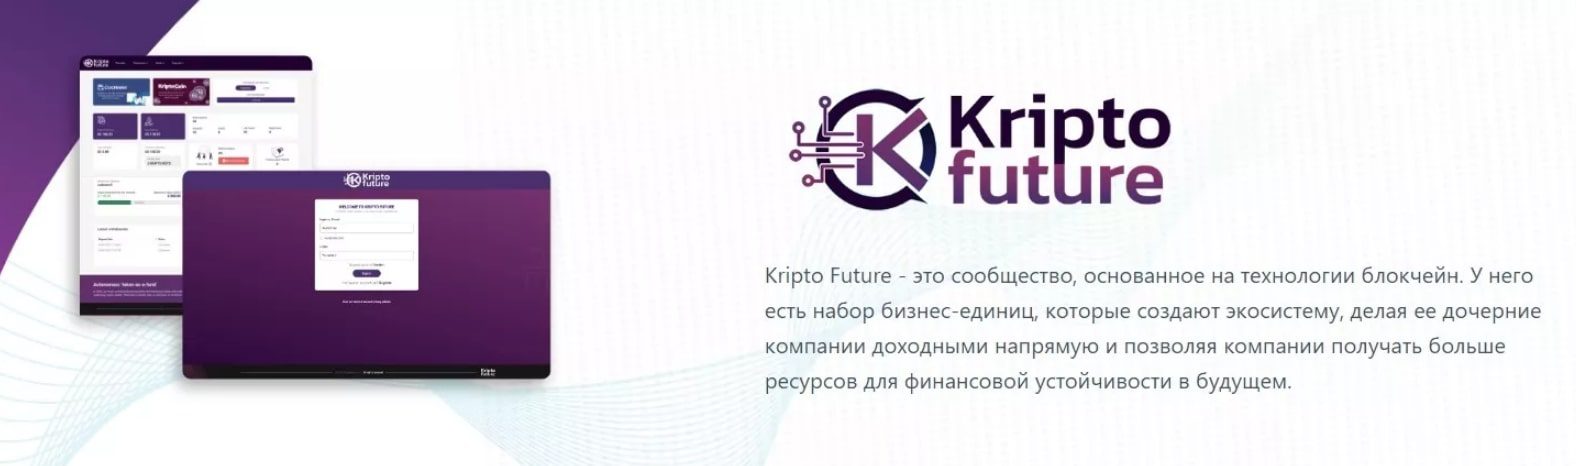 Kripto Future сайт